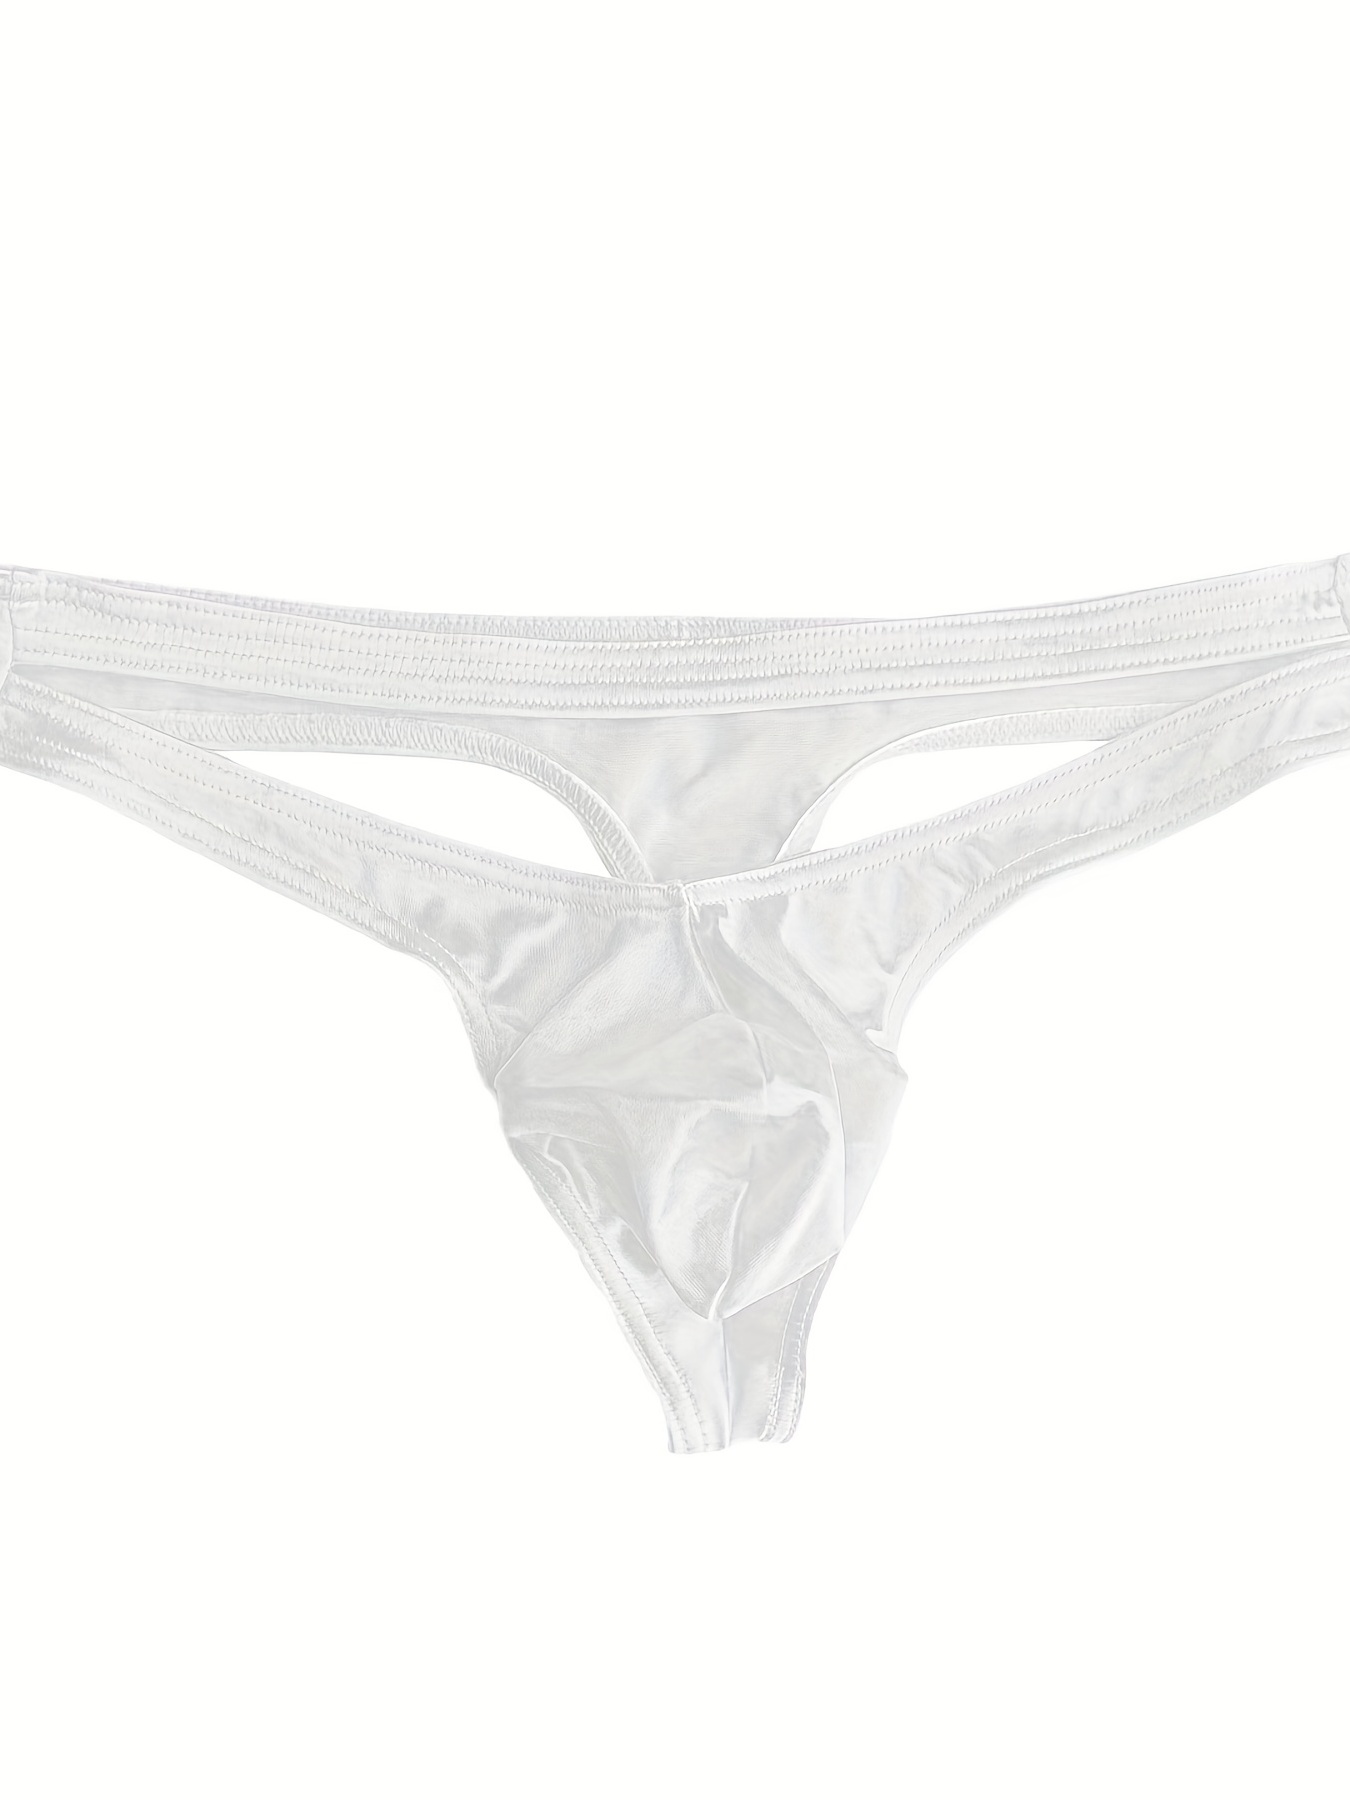 Men's Sexy Elephant Lingerie G string men T back Thongs Bulge Pouch  Underwear